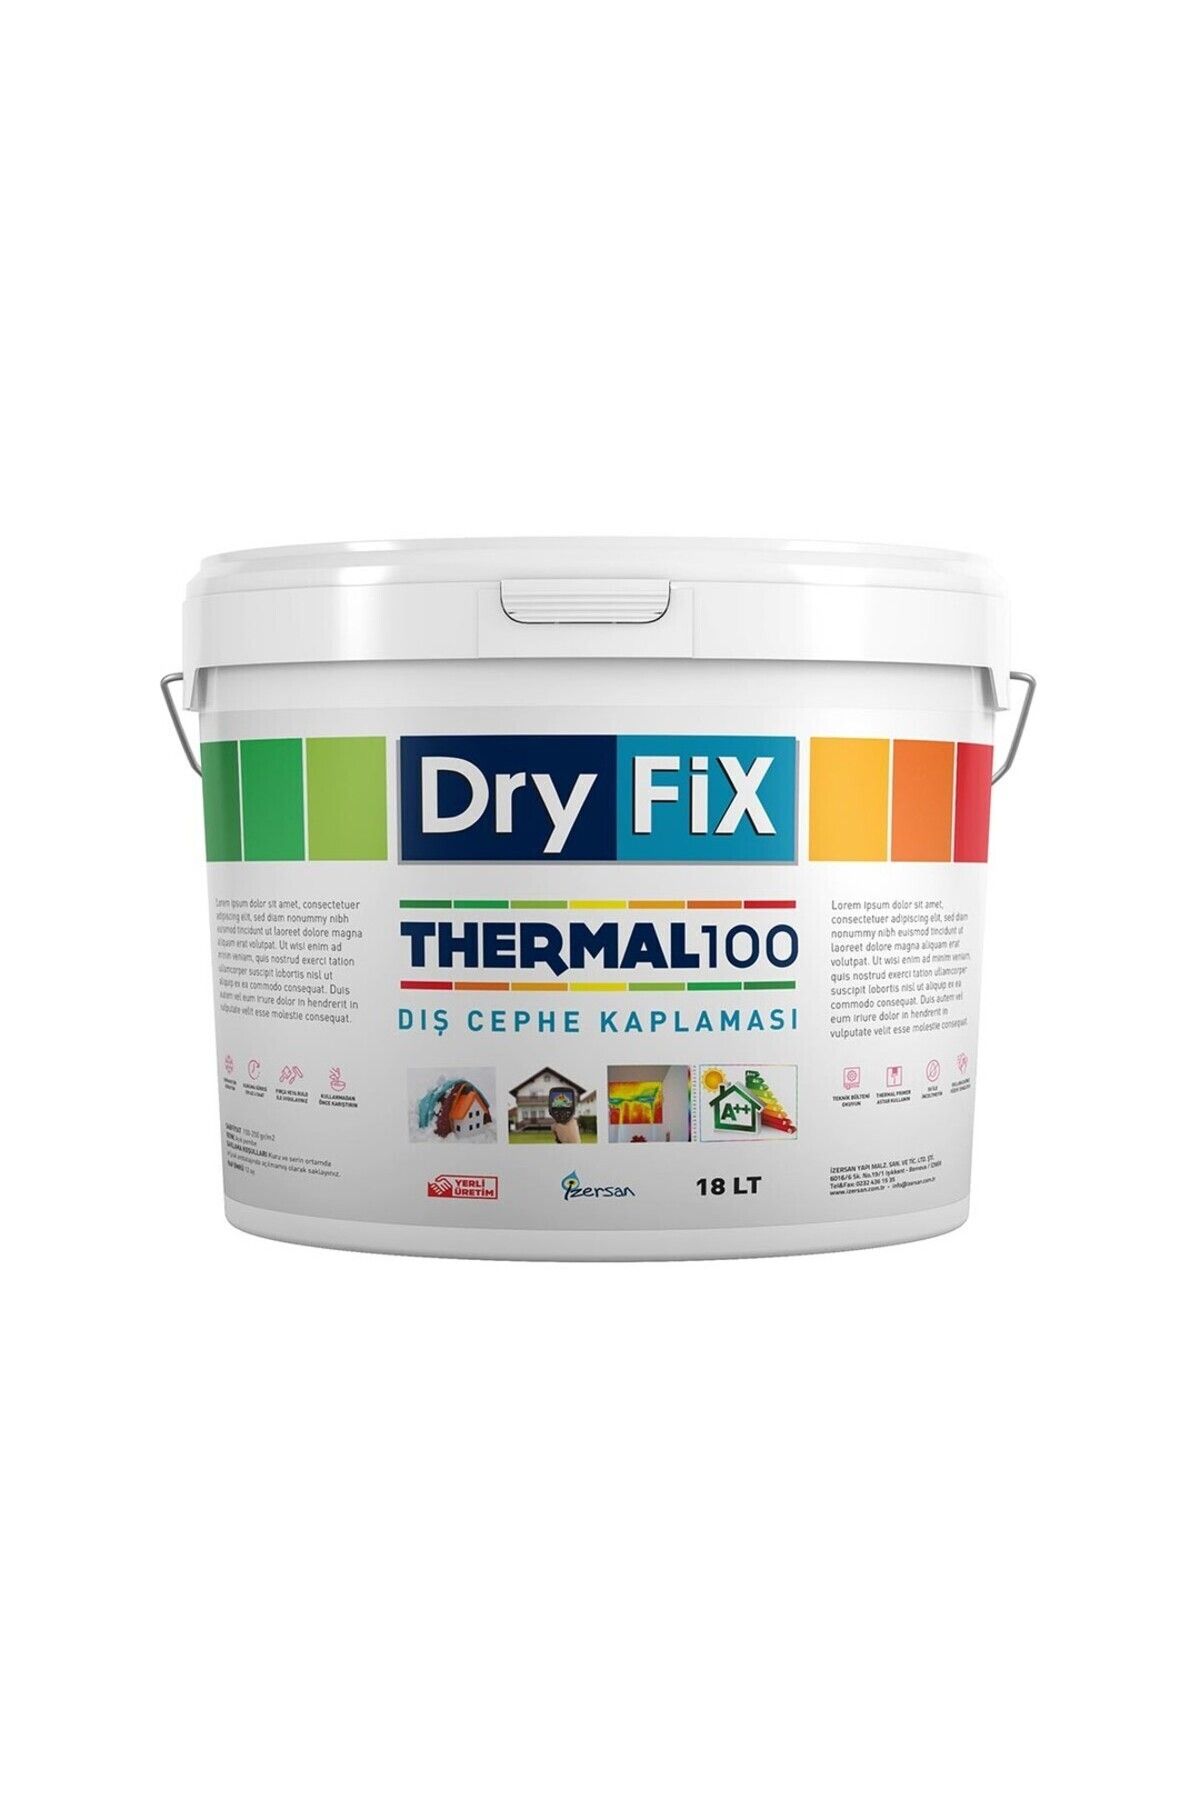 Dryfix Isı Yalıtım Kaplaması 18lt | Thermal 100